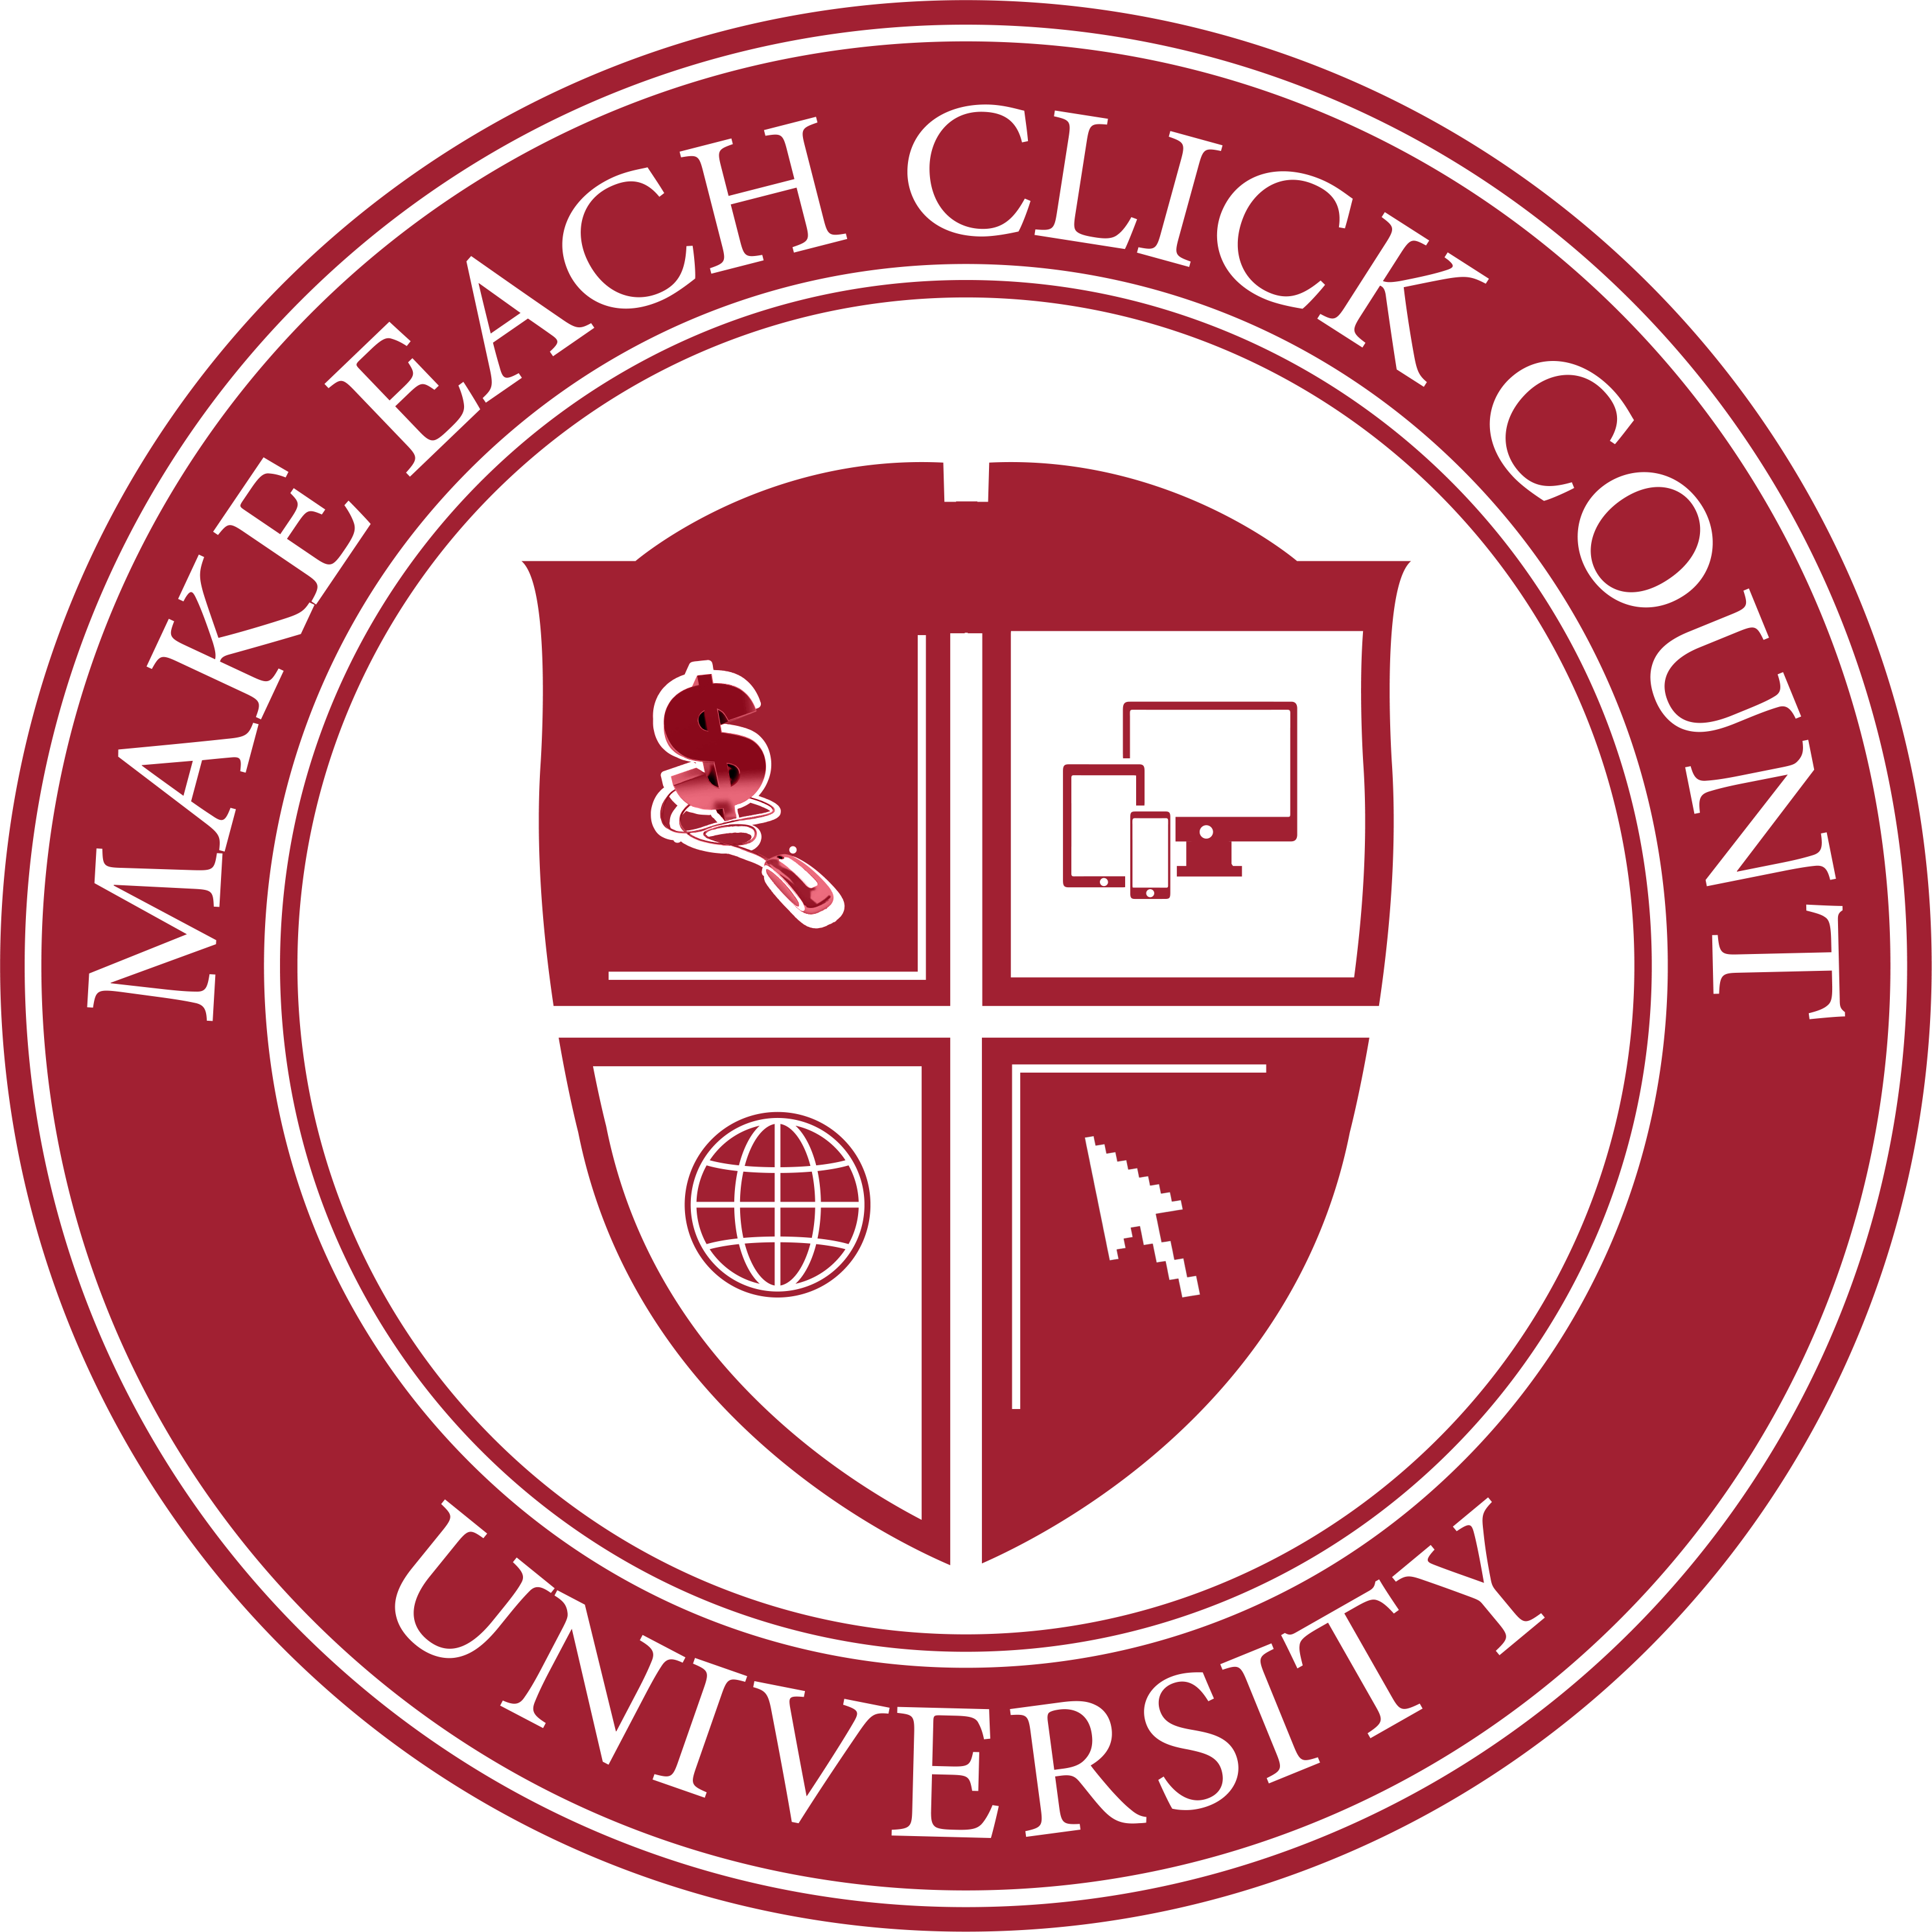 Make Each Click Count University